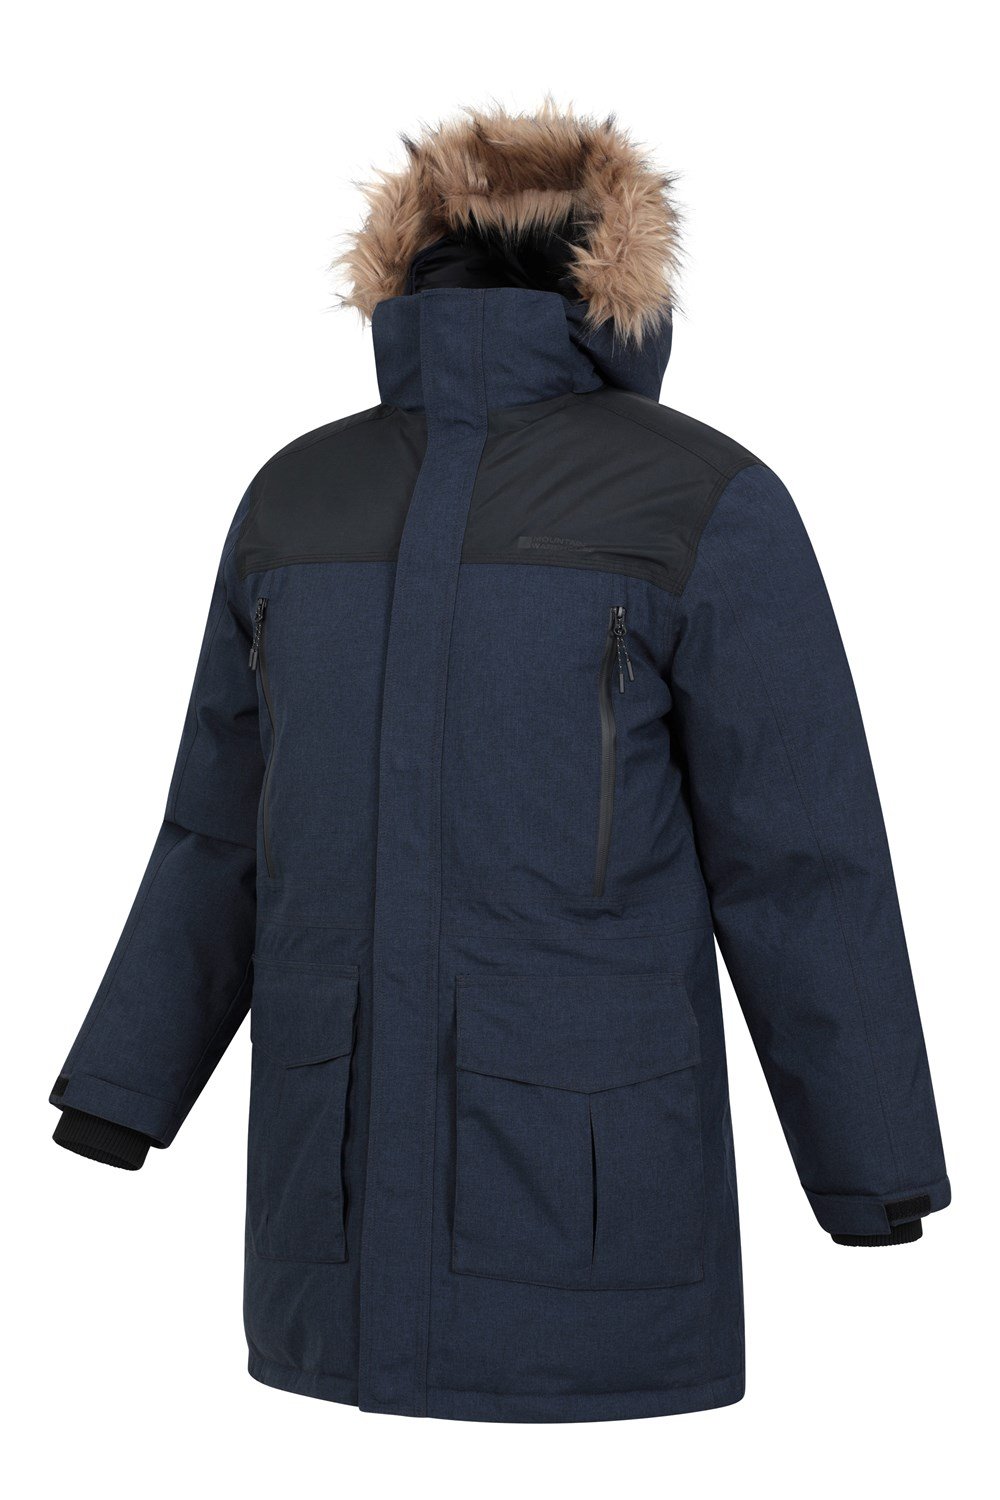 Mountain Warehouse Mens Waterproof Down Parka Jacket Winter Rain Coat ...